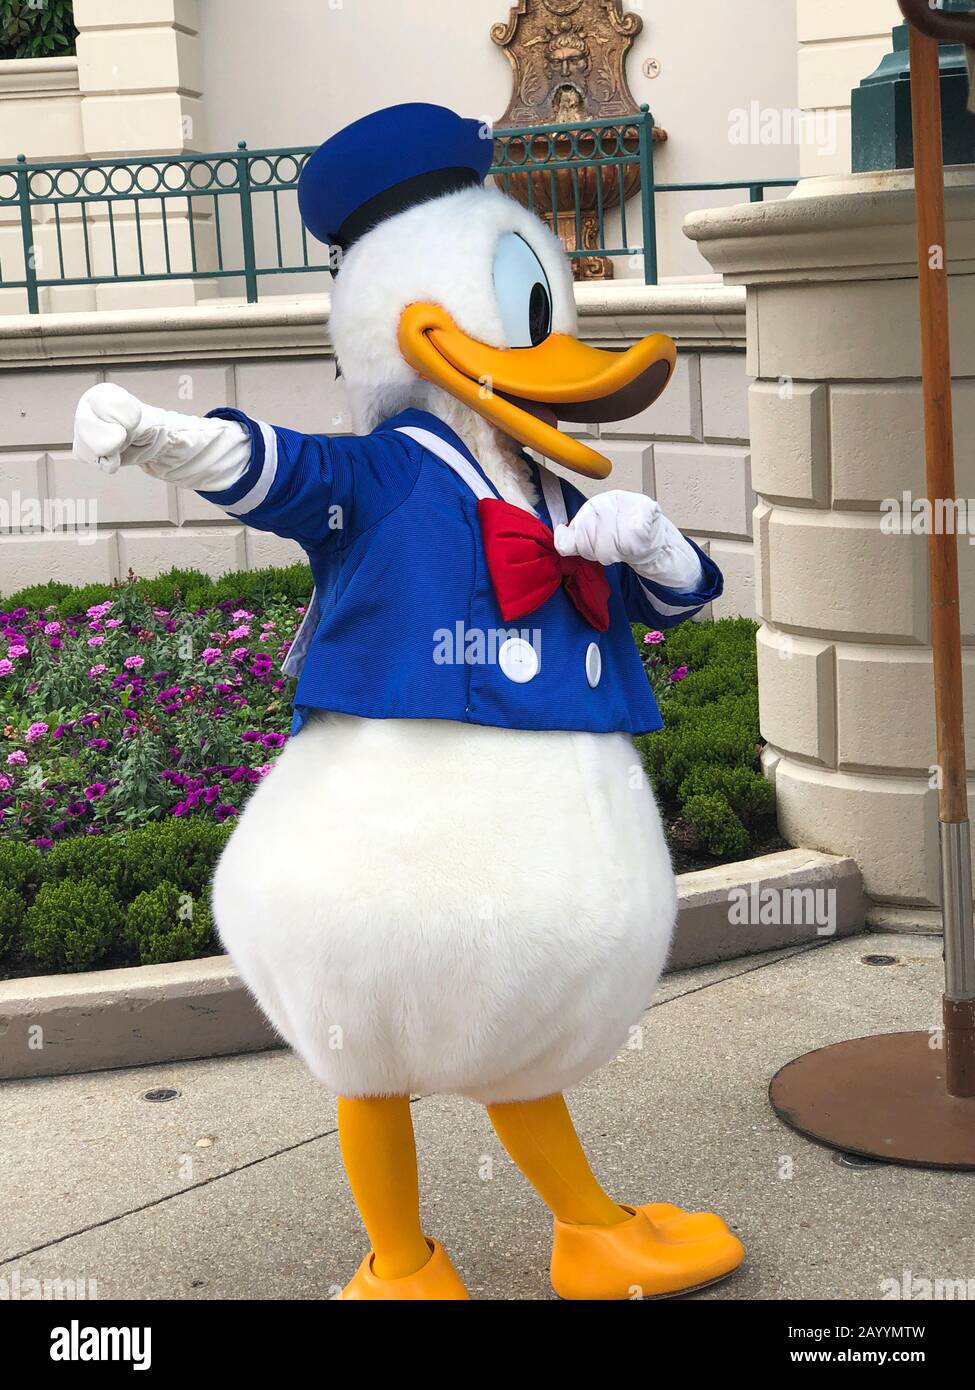 Donald duck costume -Fotos und -Bildmaterial in hoher Auflösung – Alamy